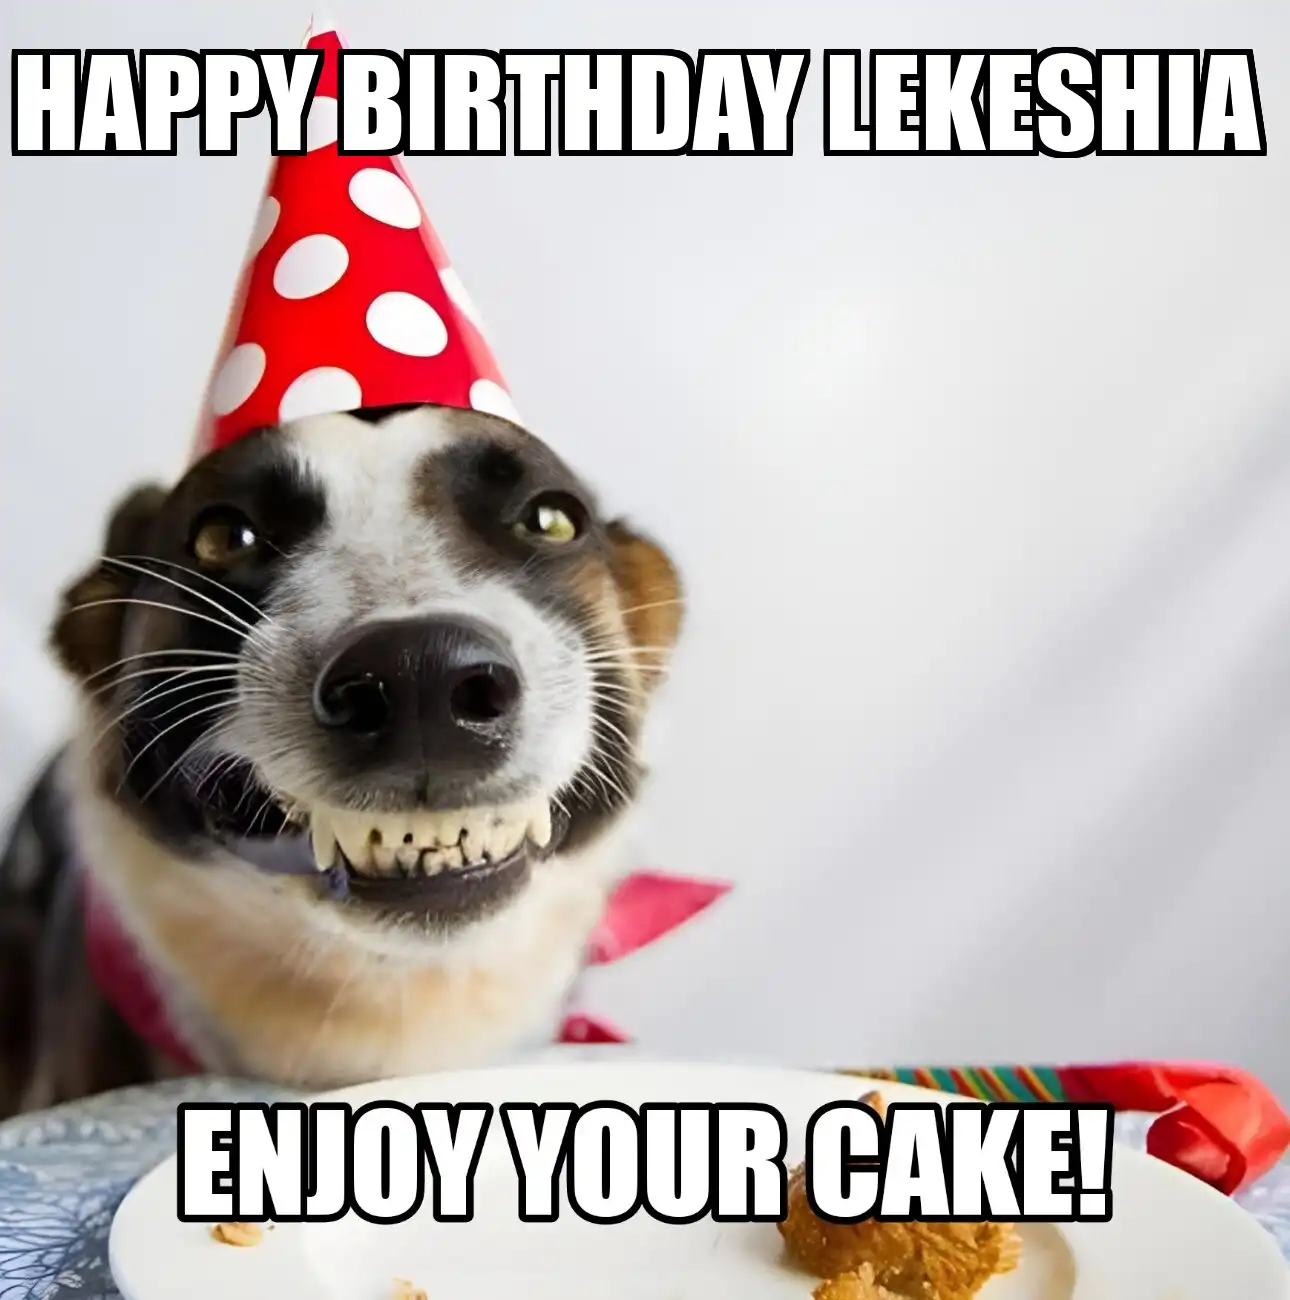 Happy Birthday Lekeshia Enjoy Your Cake Dog Meme